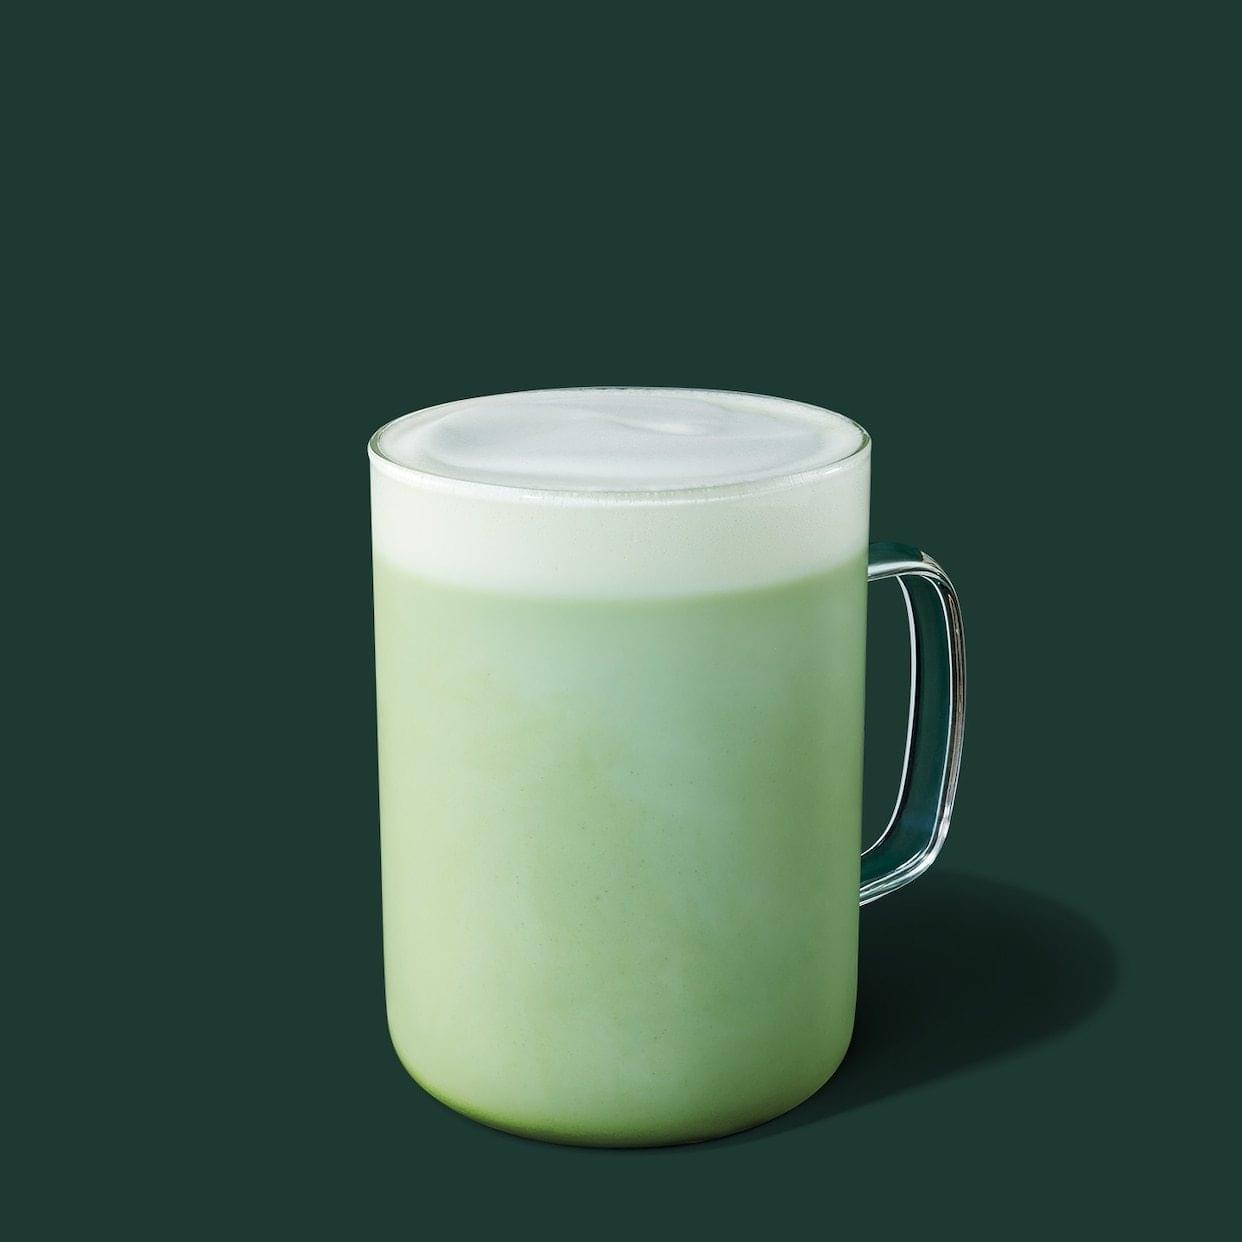 Starbucks Tall Matcha Green Tea Latte Nutrition Facts